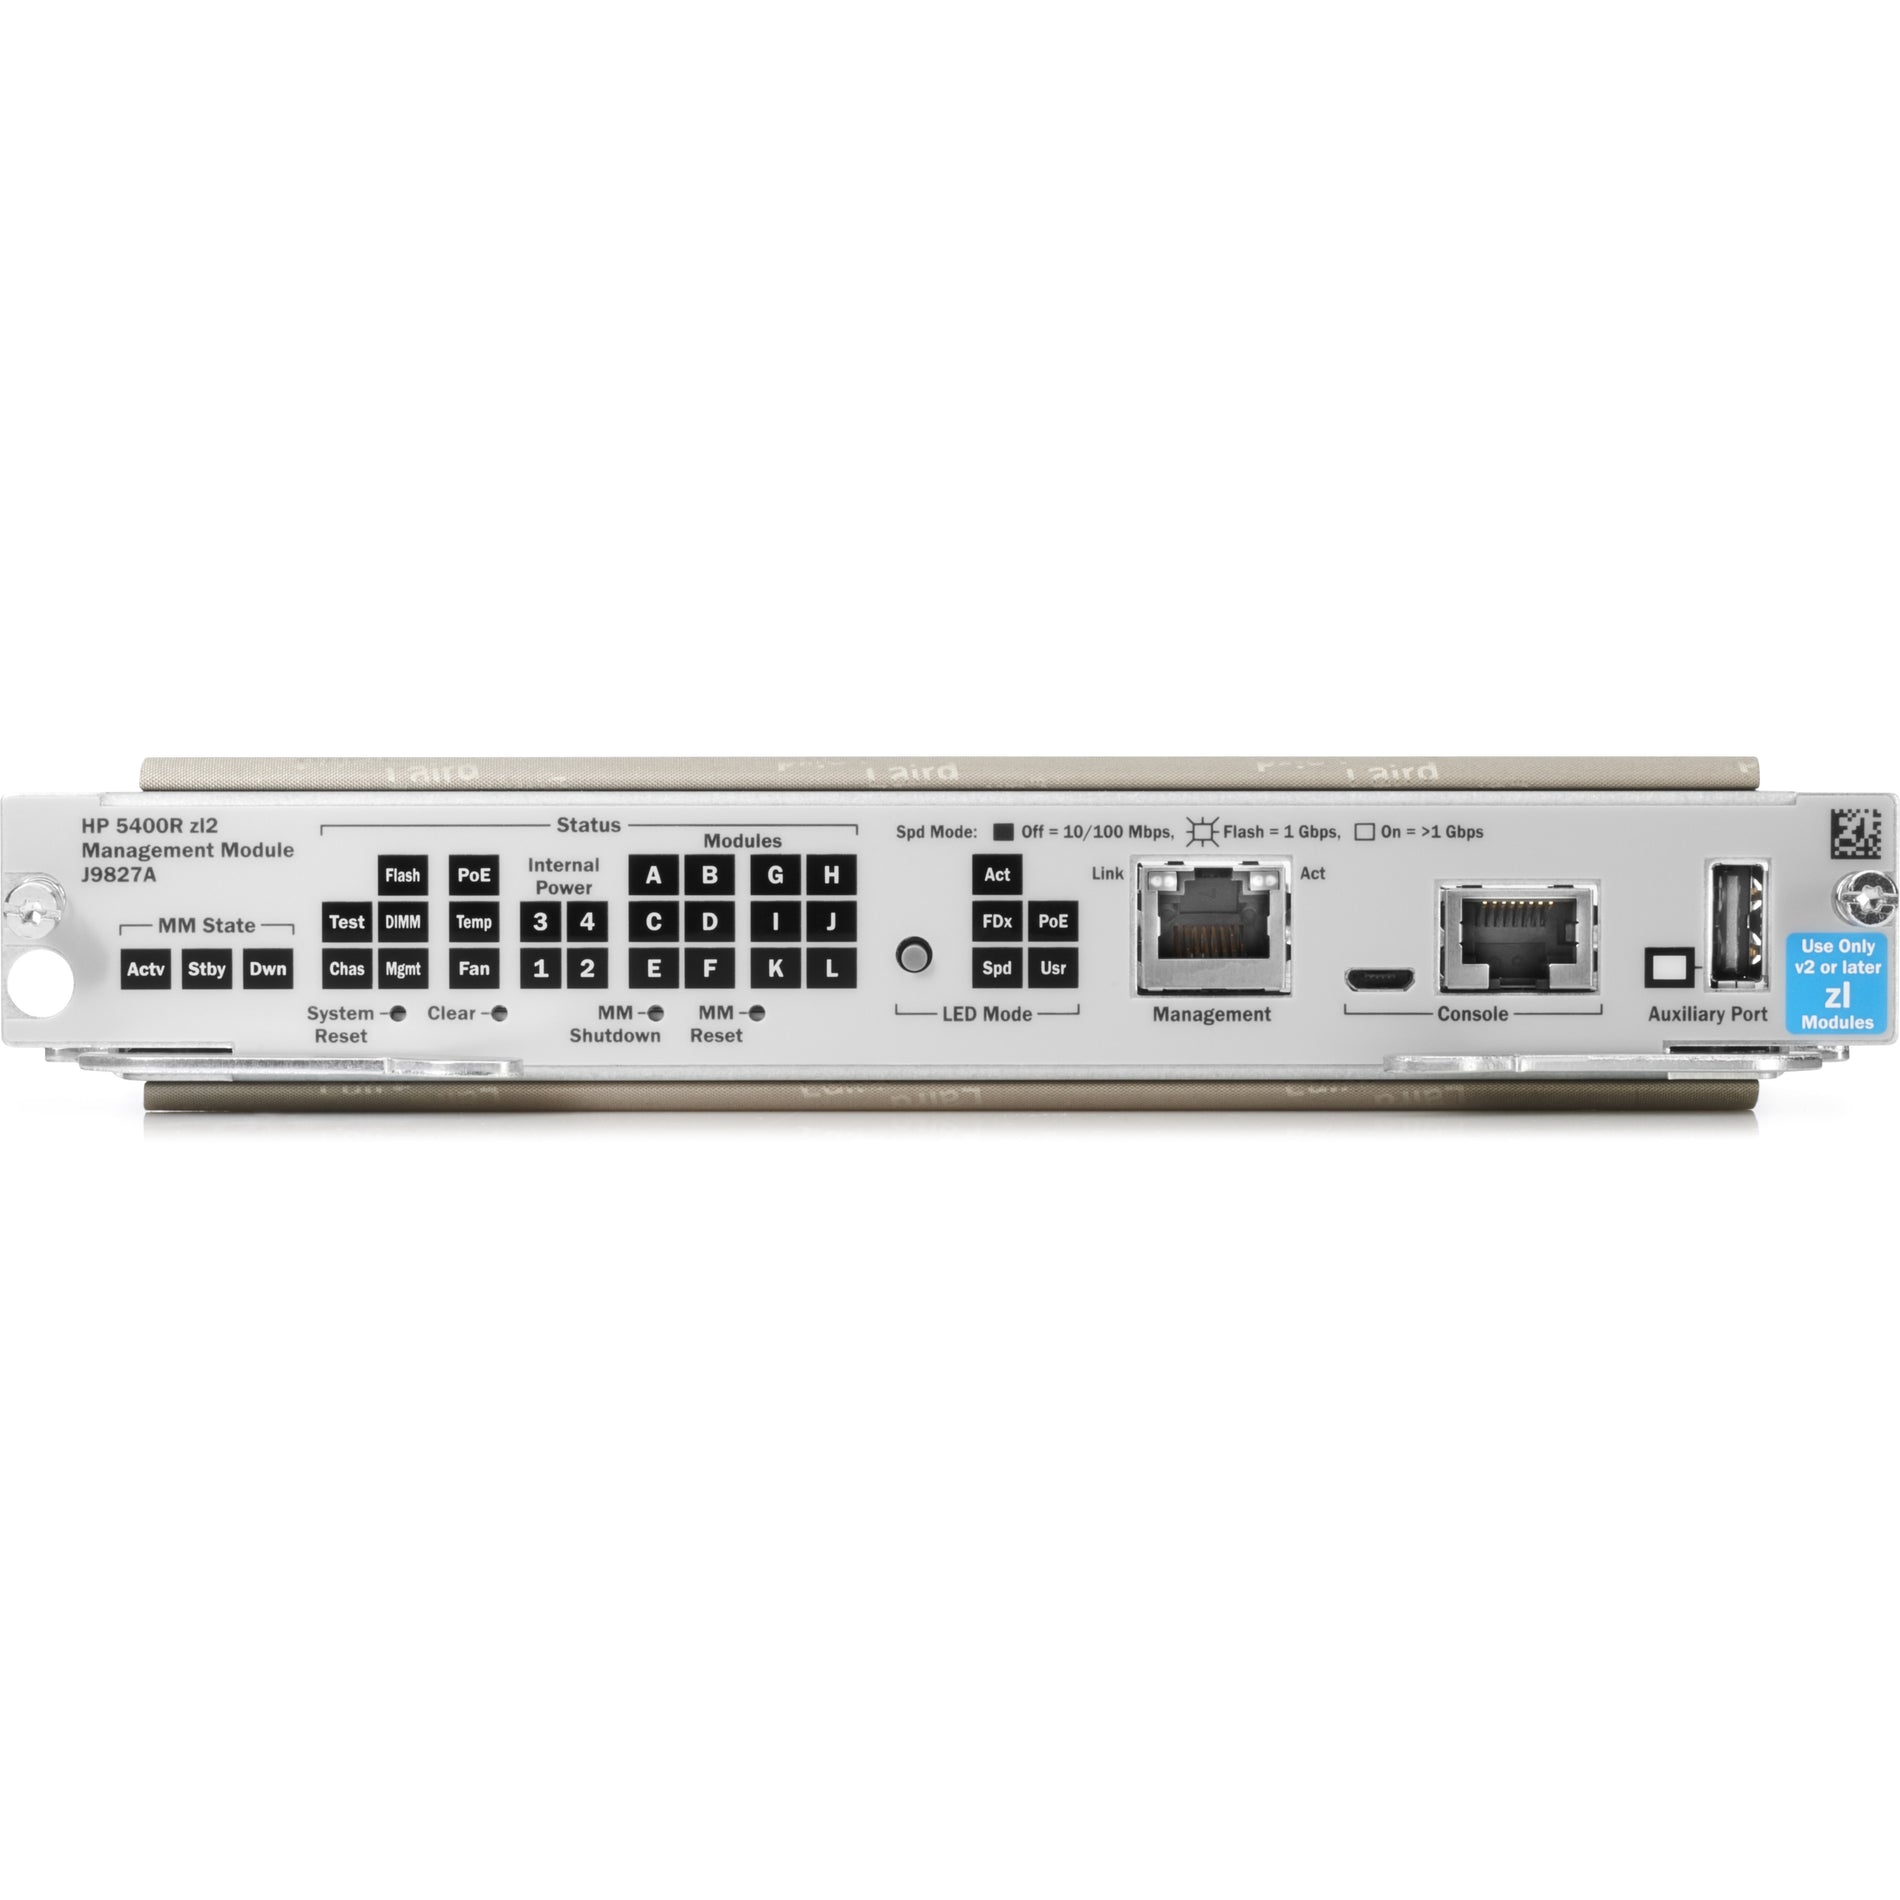 HPE J9827A 5400R zl2 Management Modul USB Management für HP 5400R Serie Switches